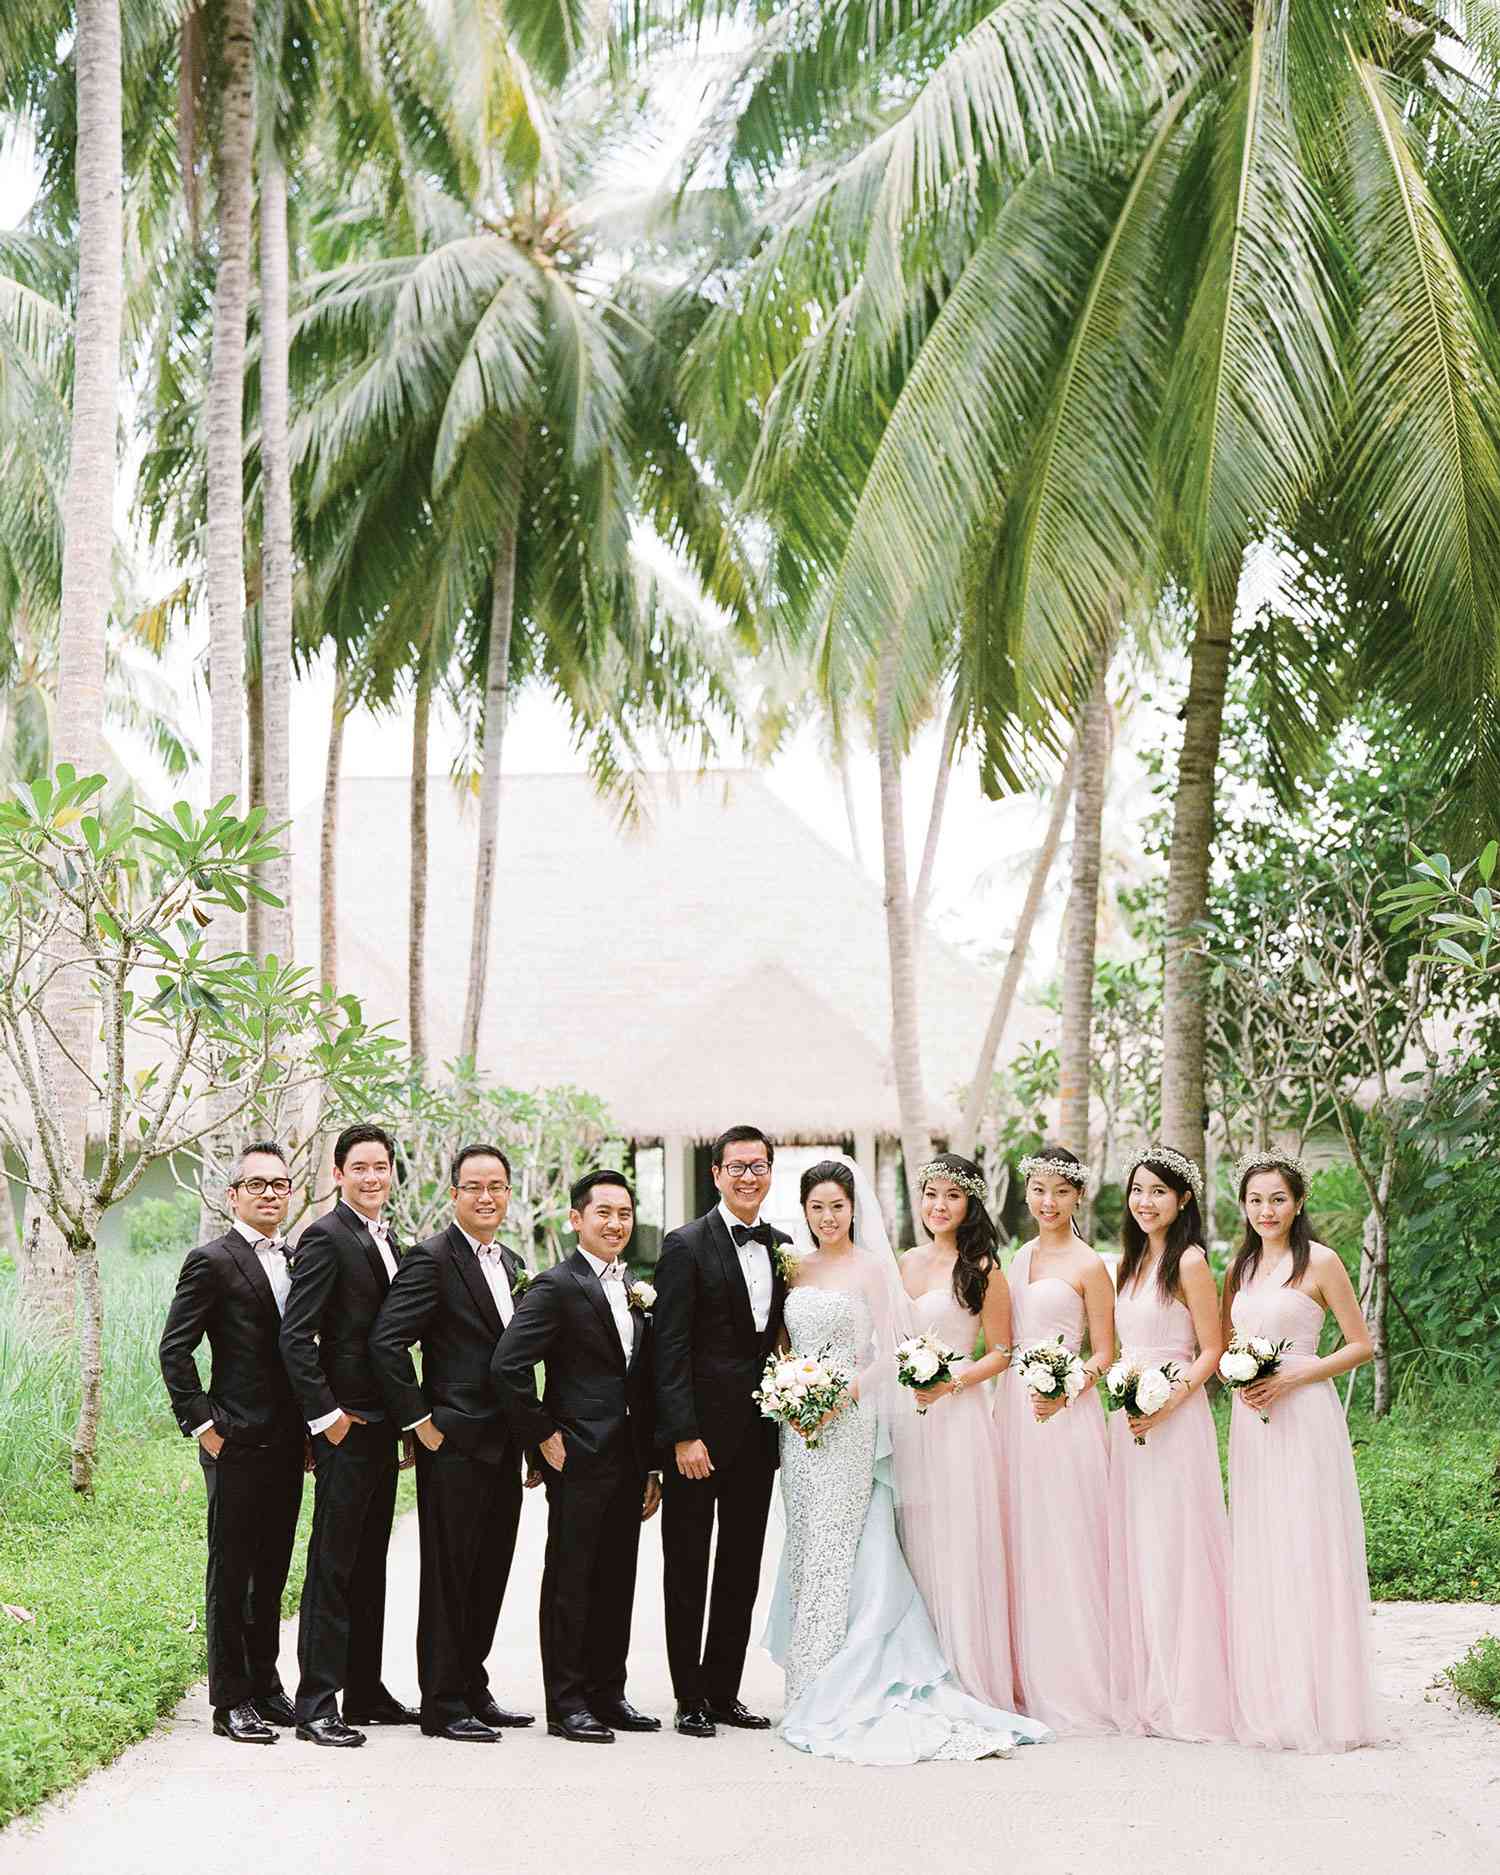 peony-richard-wedding-maldives-bridal-party-palm-trees-1258-s112383.jpg